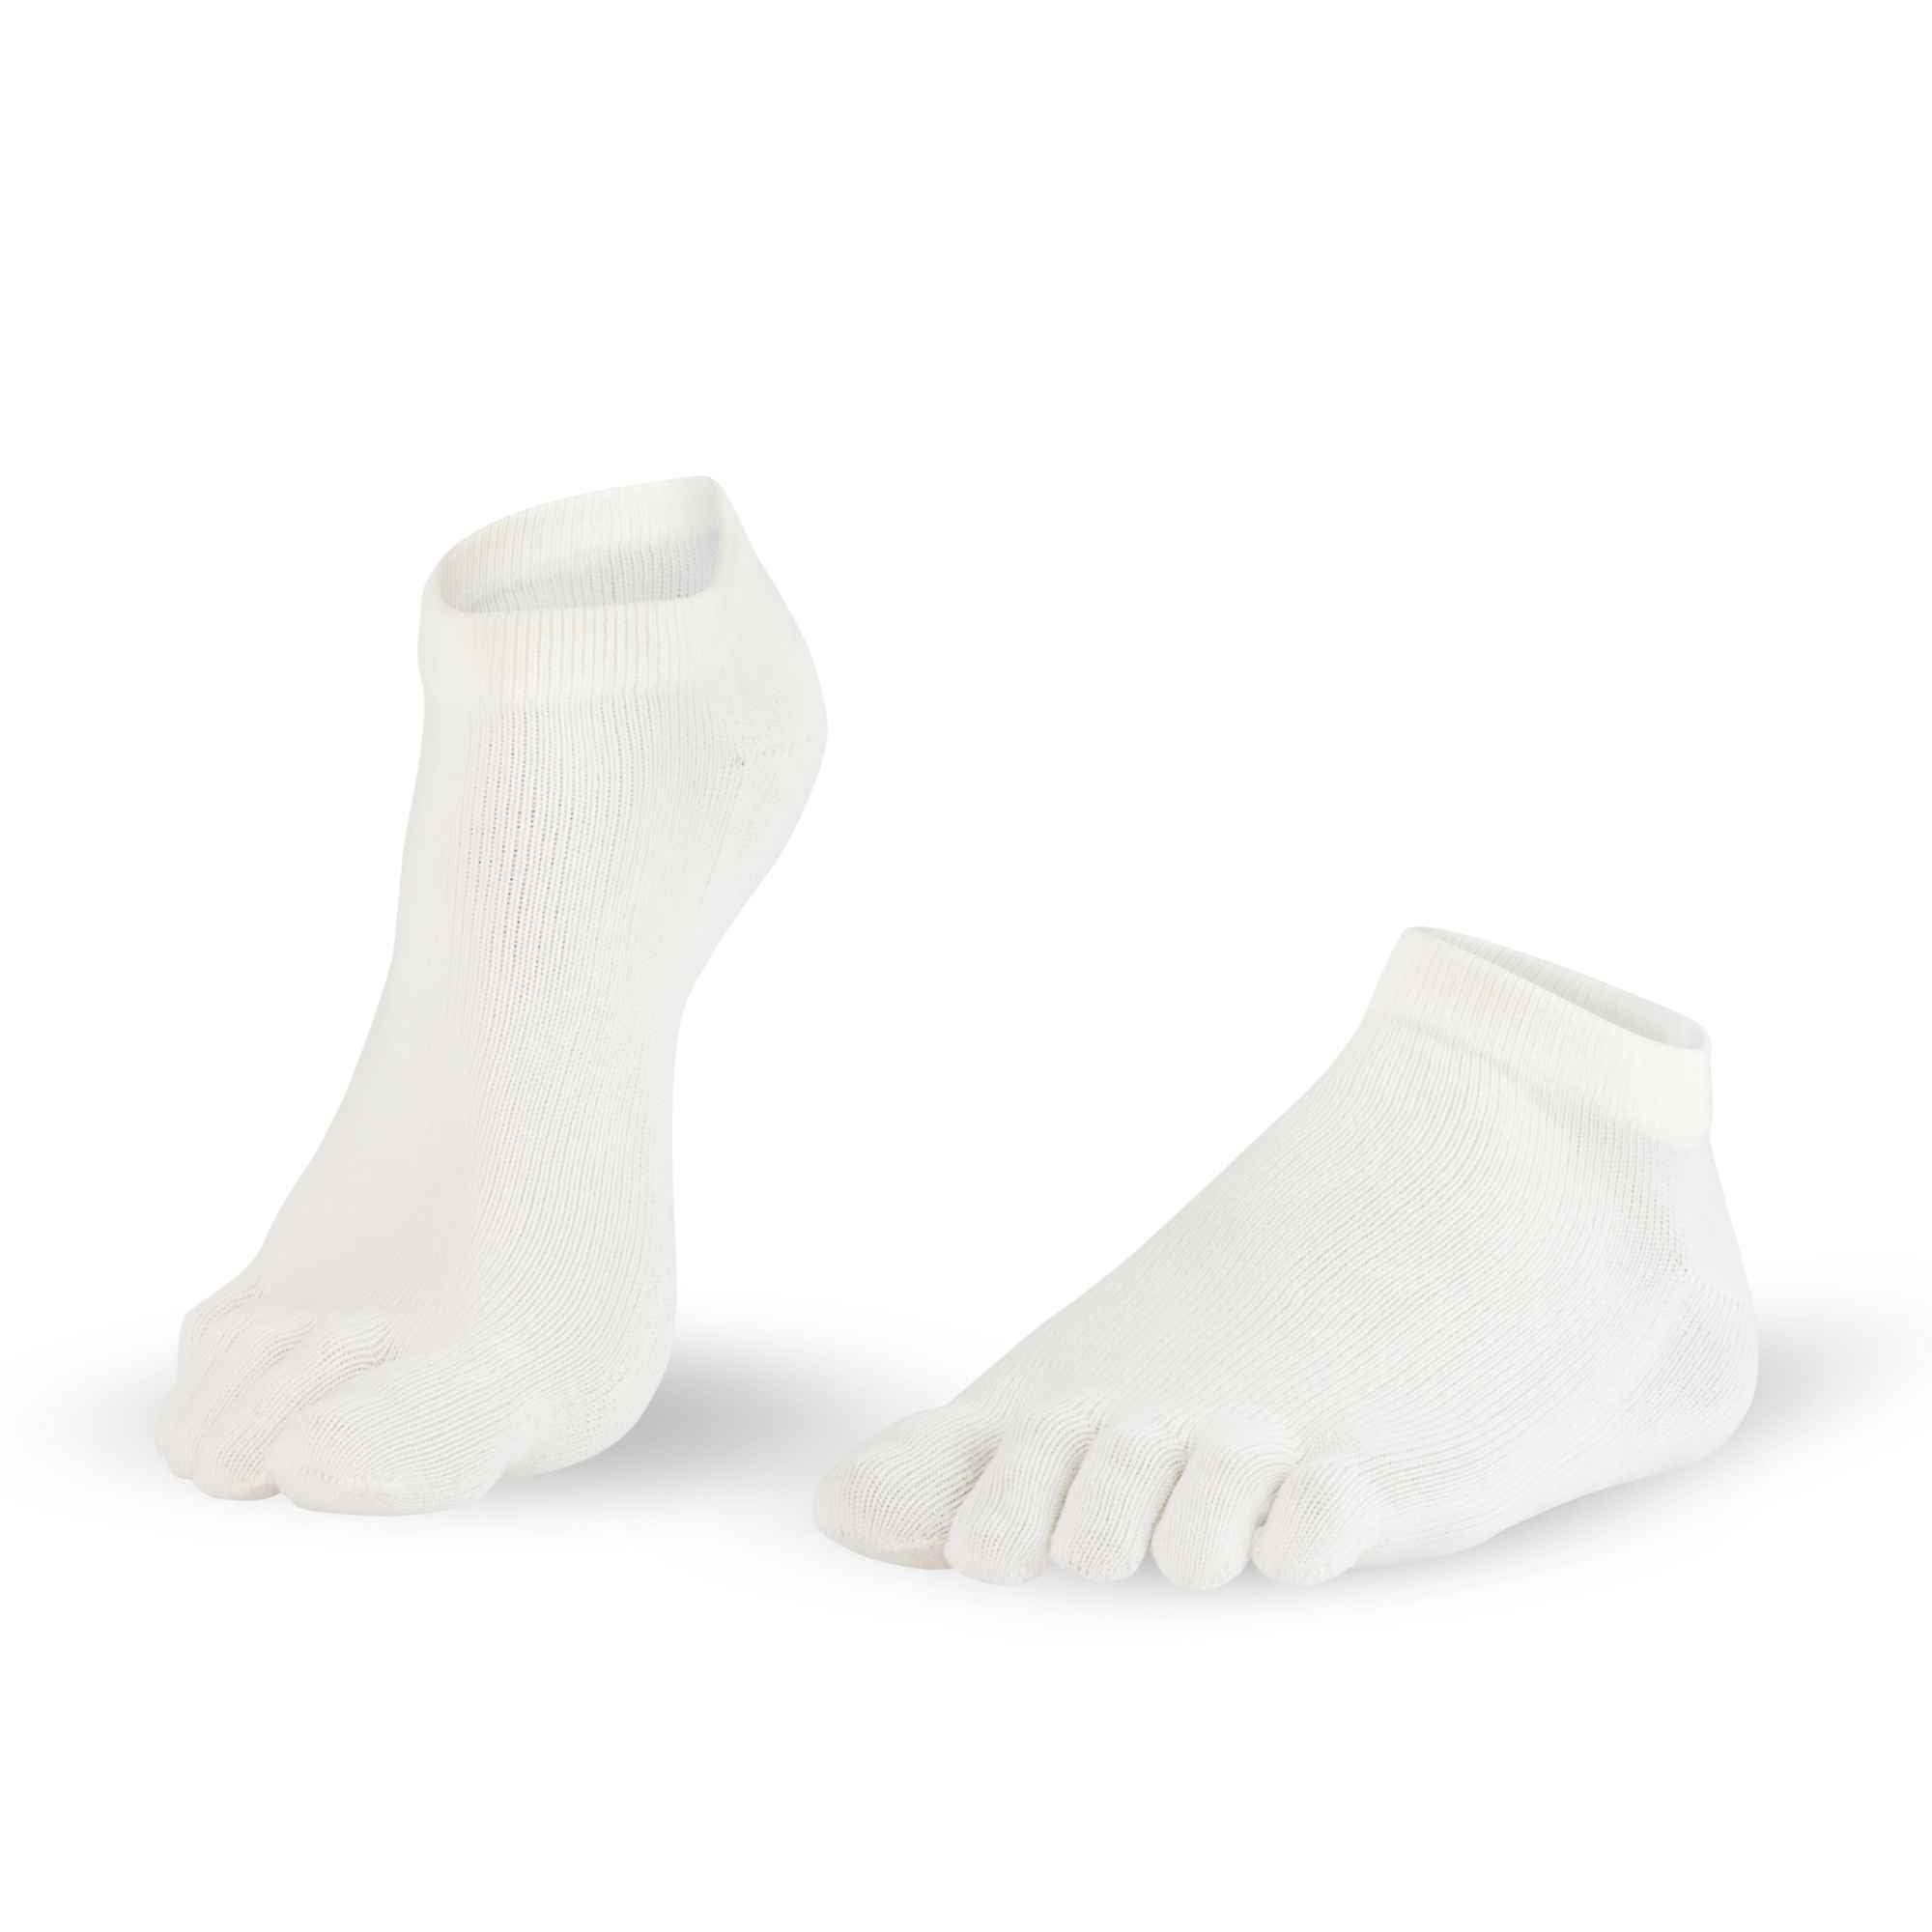 7-Dr-Foot-Silver-Protect-Sneaker teensokken wit mannen vrouwen zilvervezel